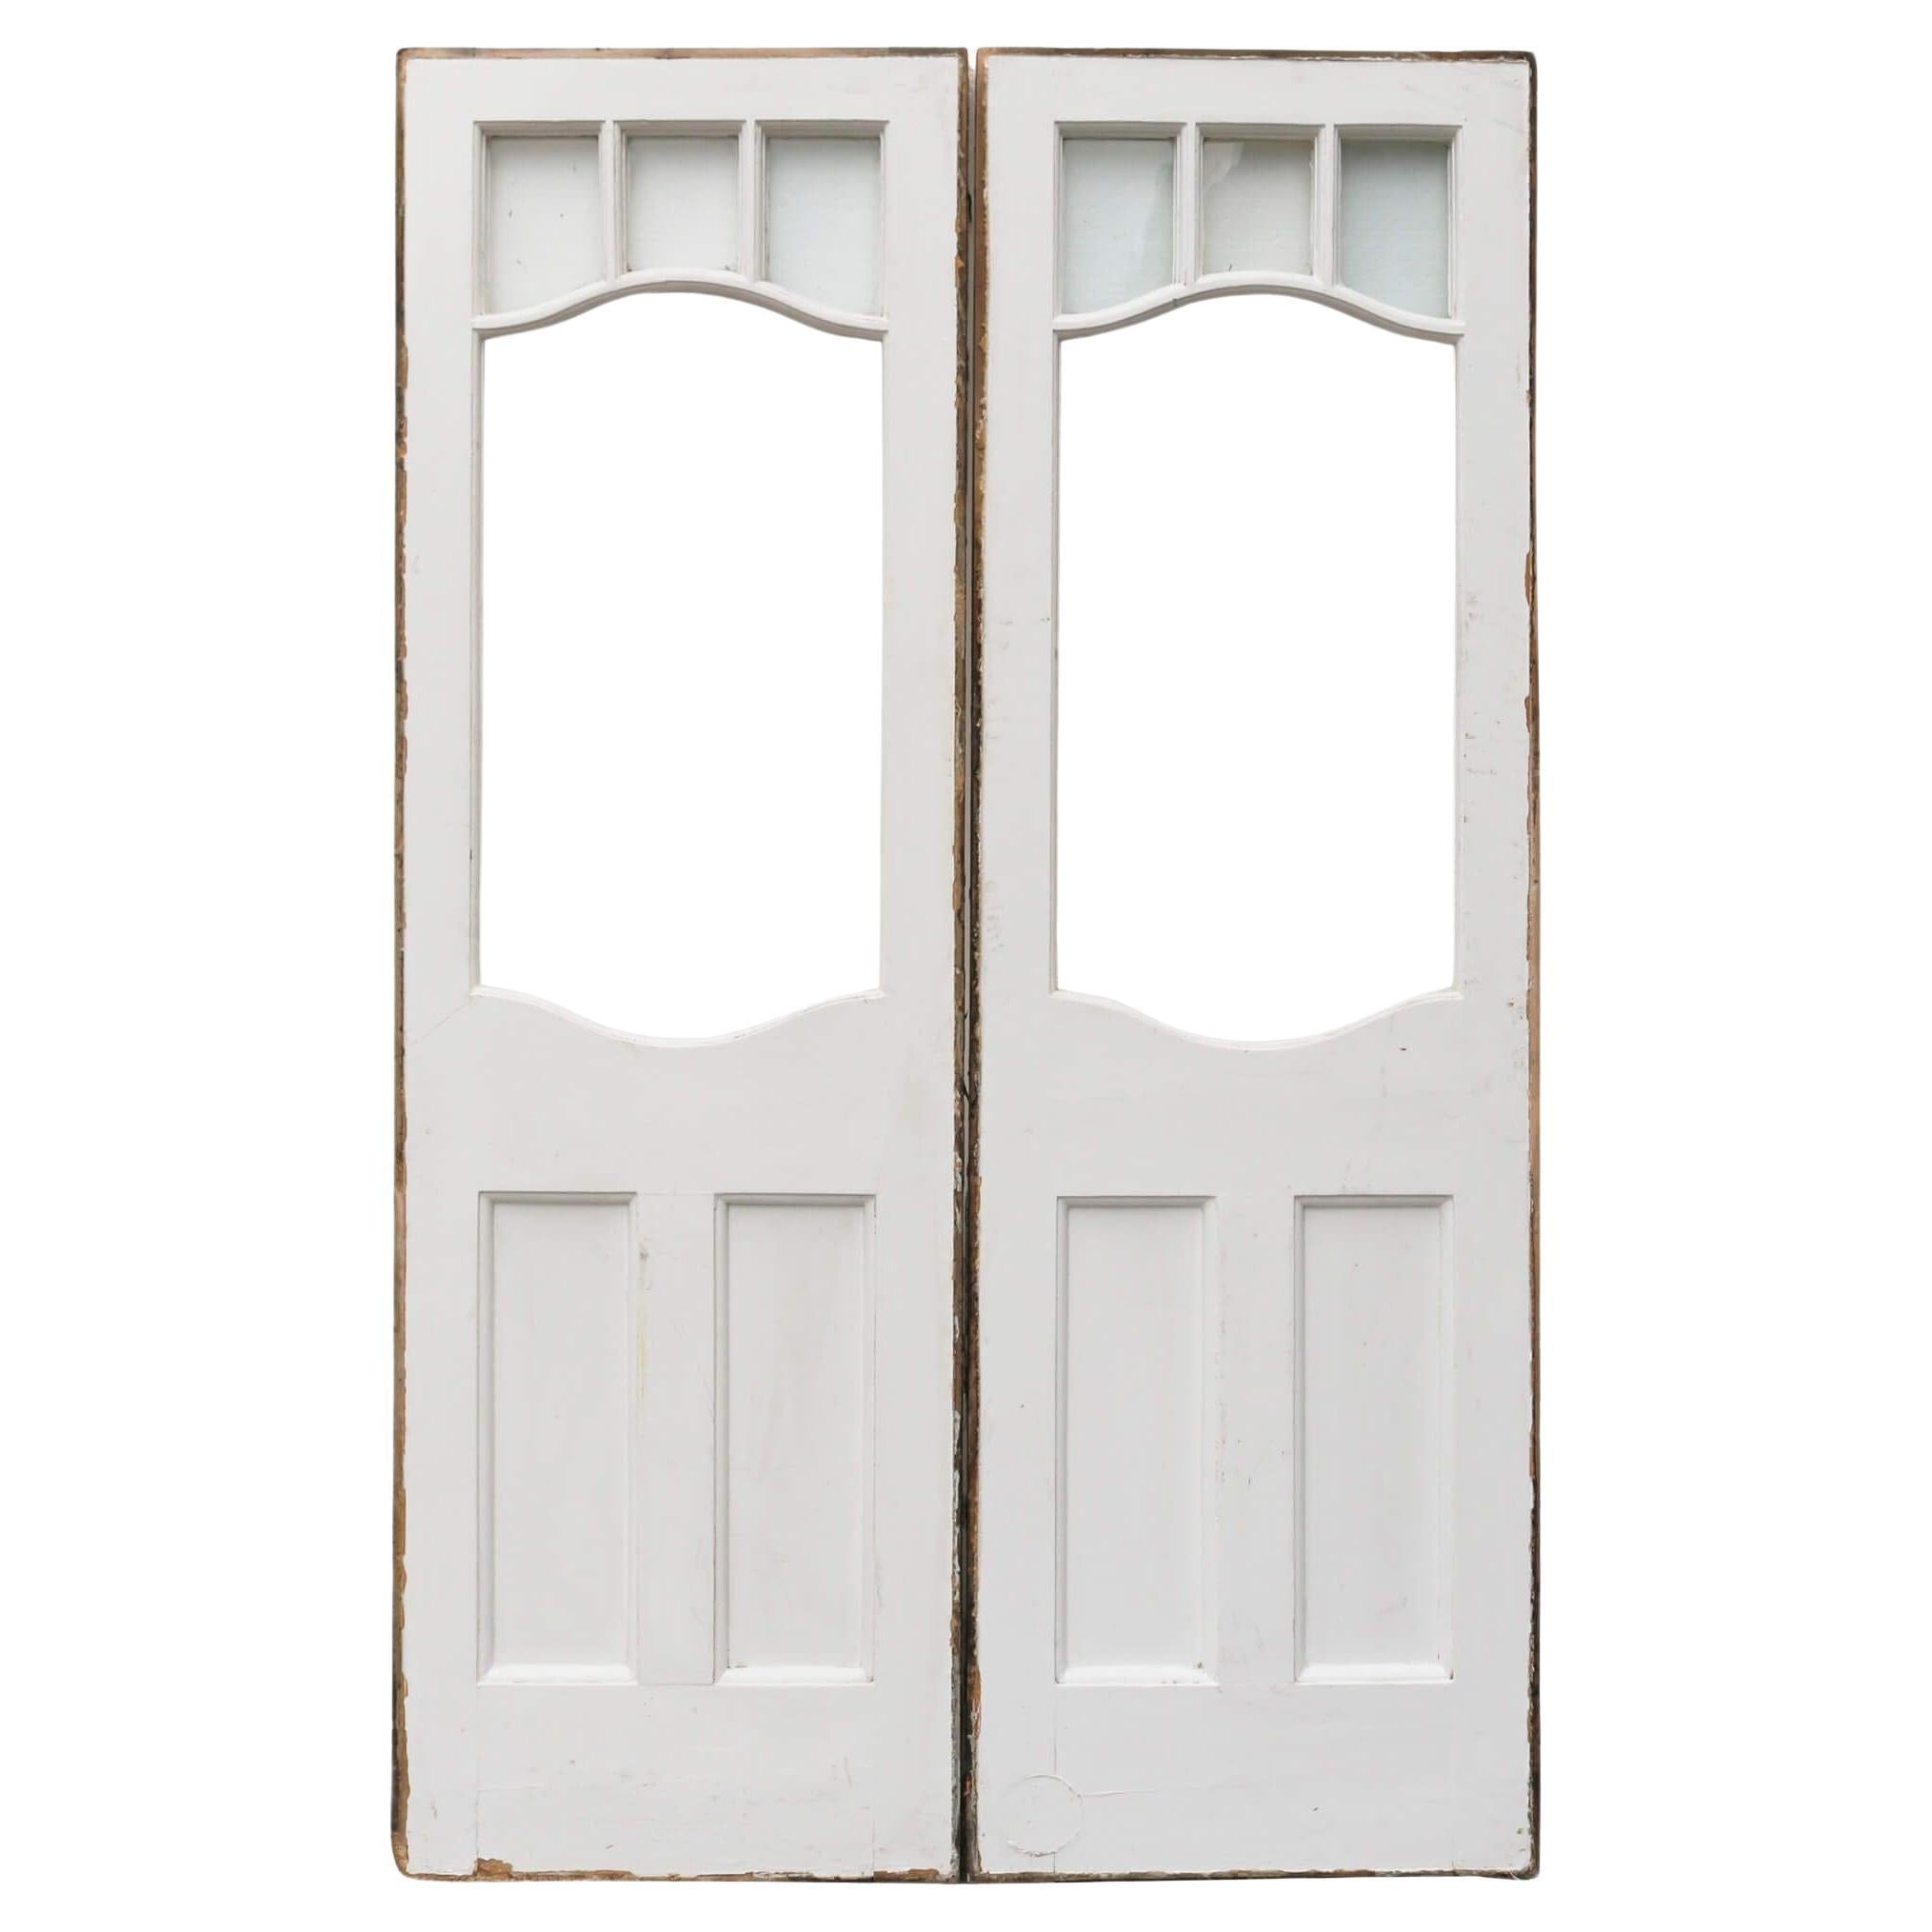 Glazed Victorian Internal or External Double Doors For Sale